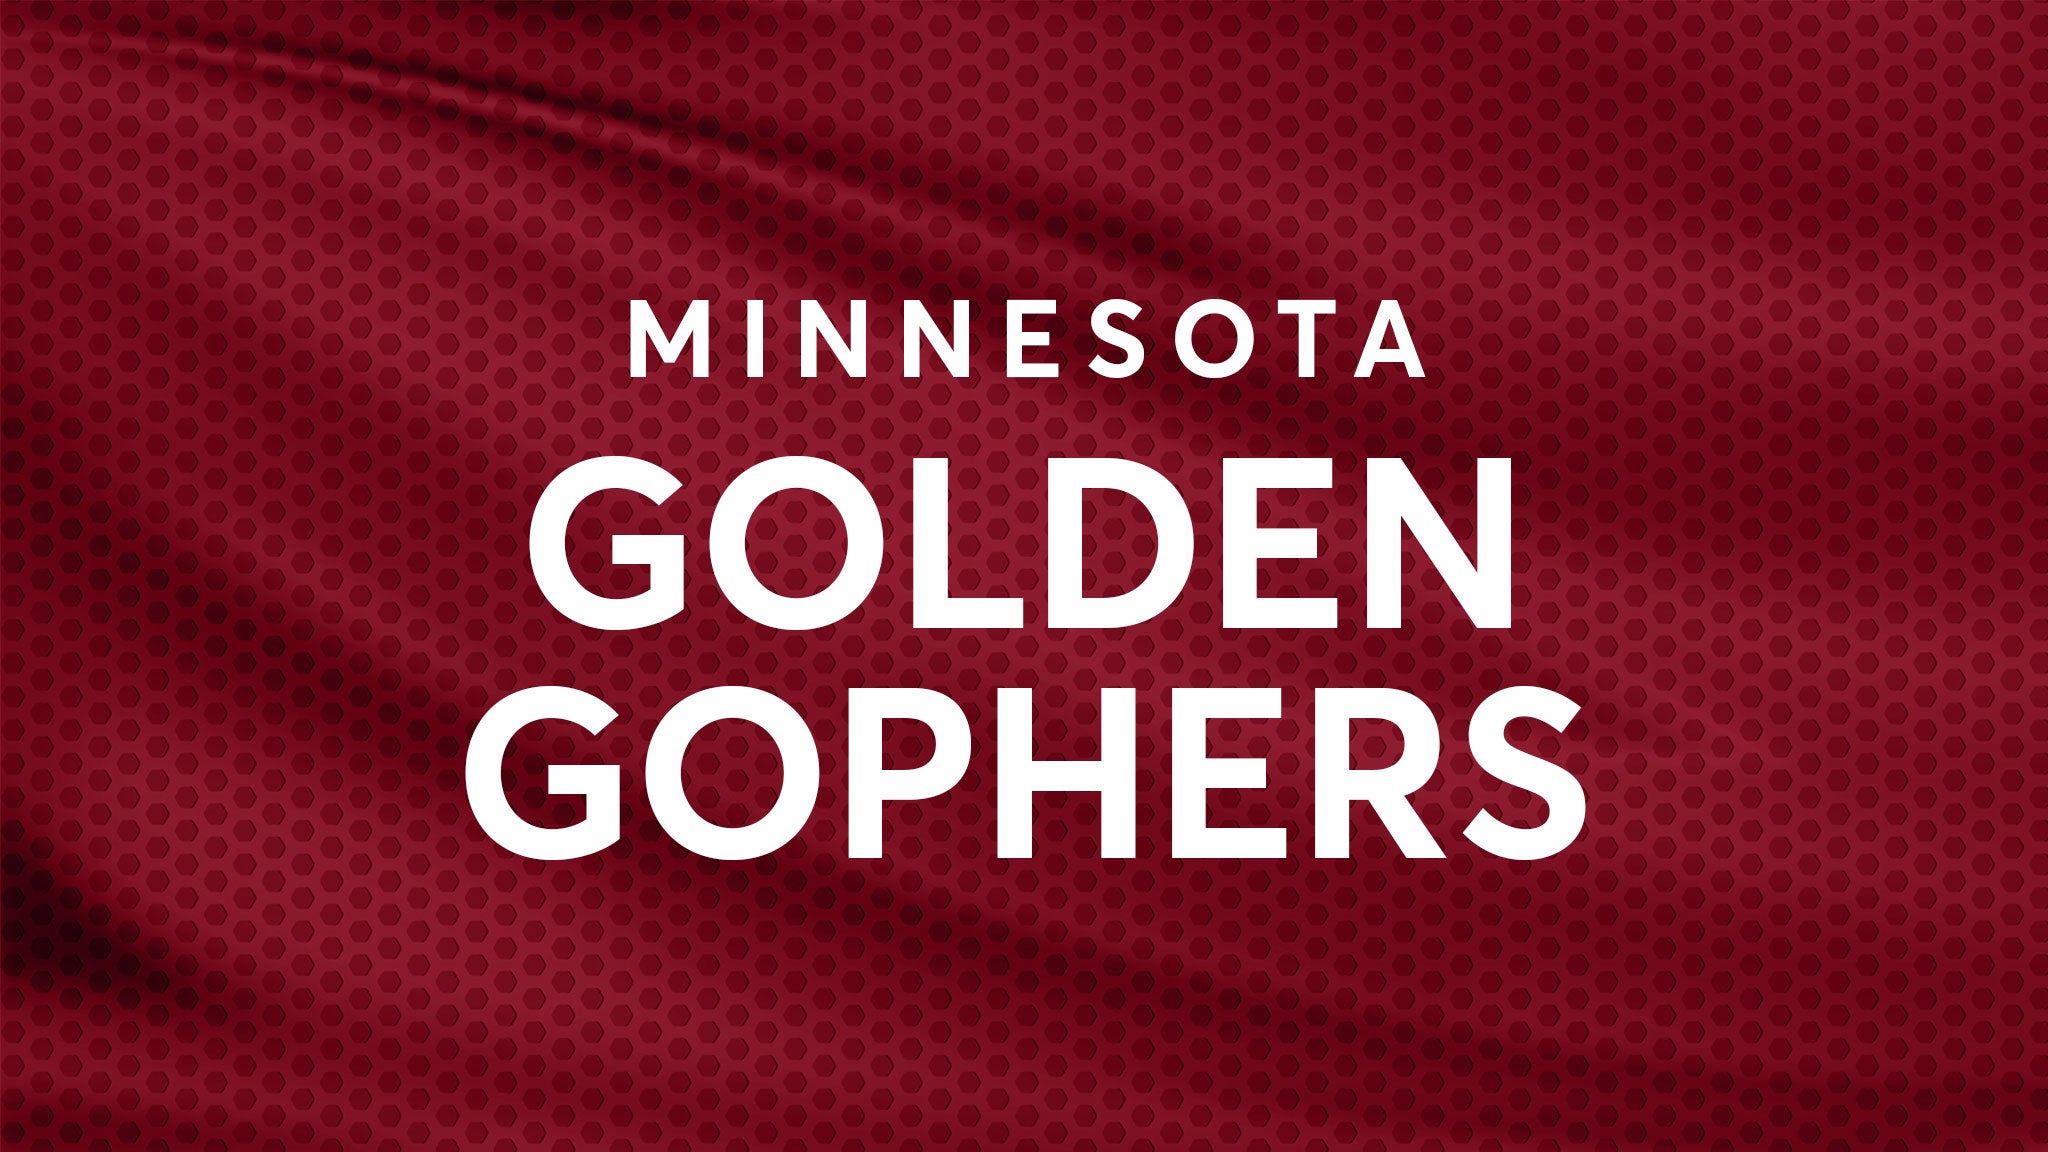 Minnesota Gophers Football vs. Rhode Island Rams Football hero